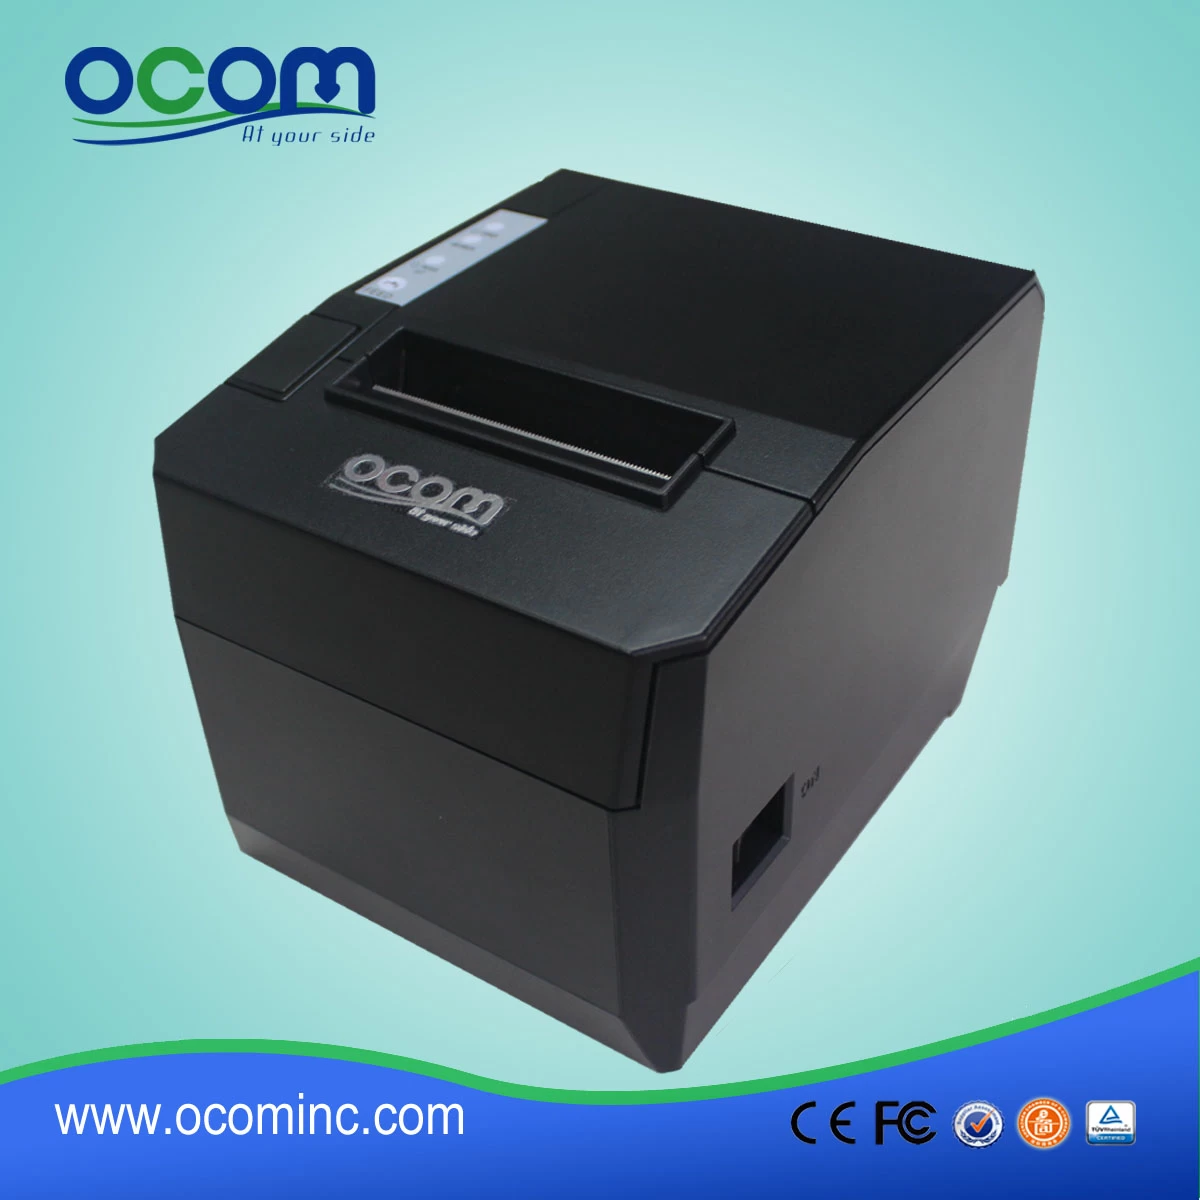 China Thermal 80mm POS Printer Price OCPP-88A-URL